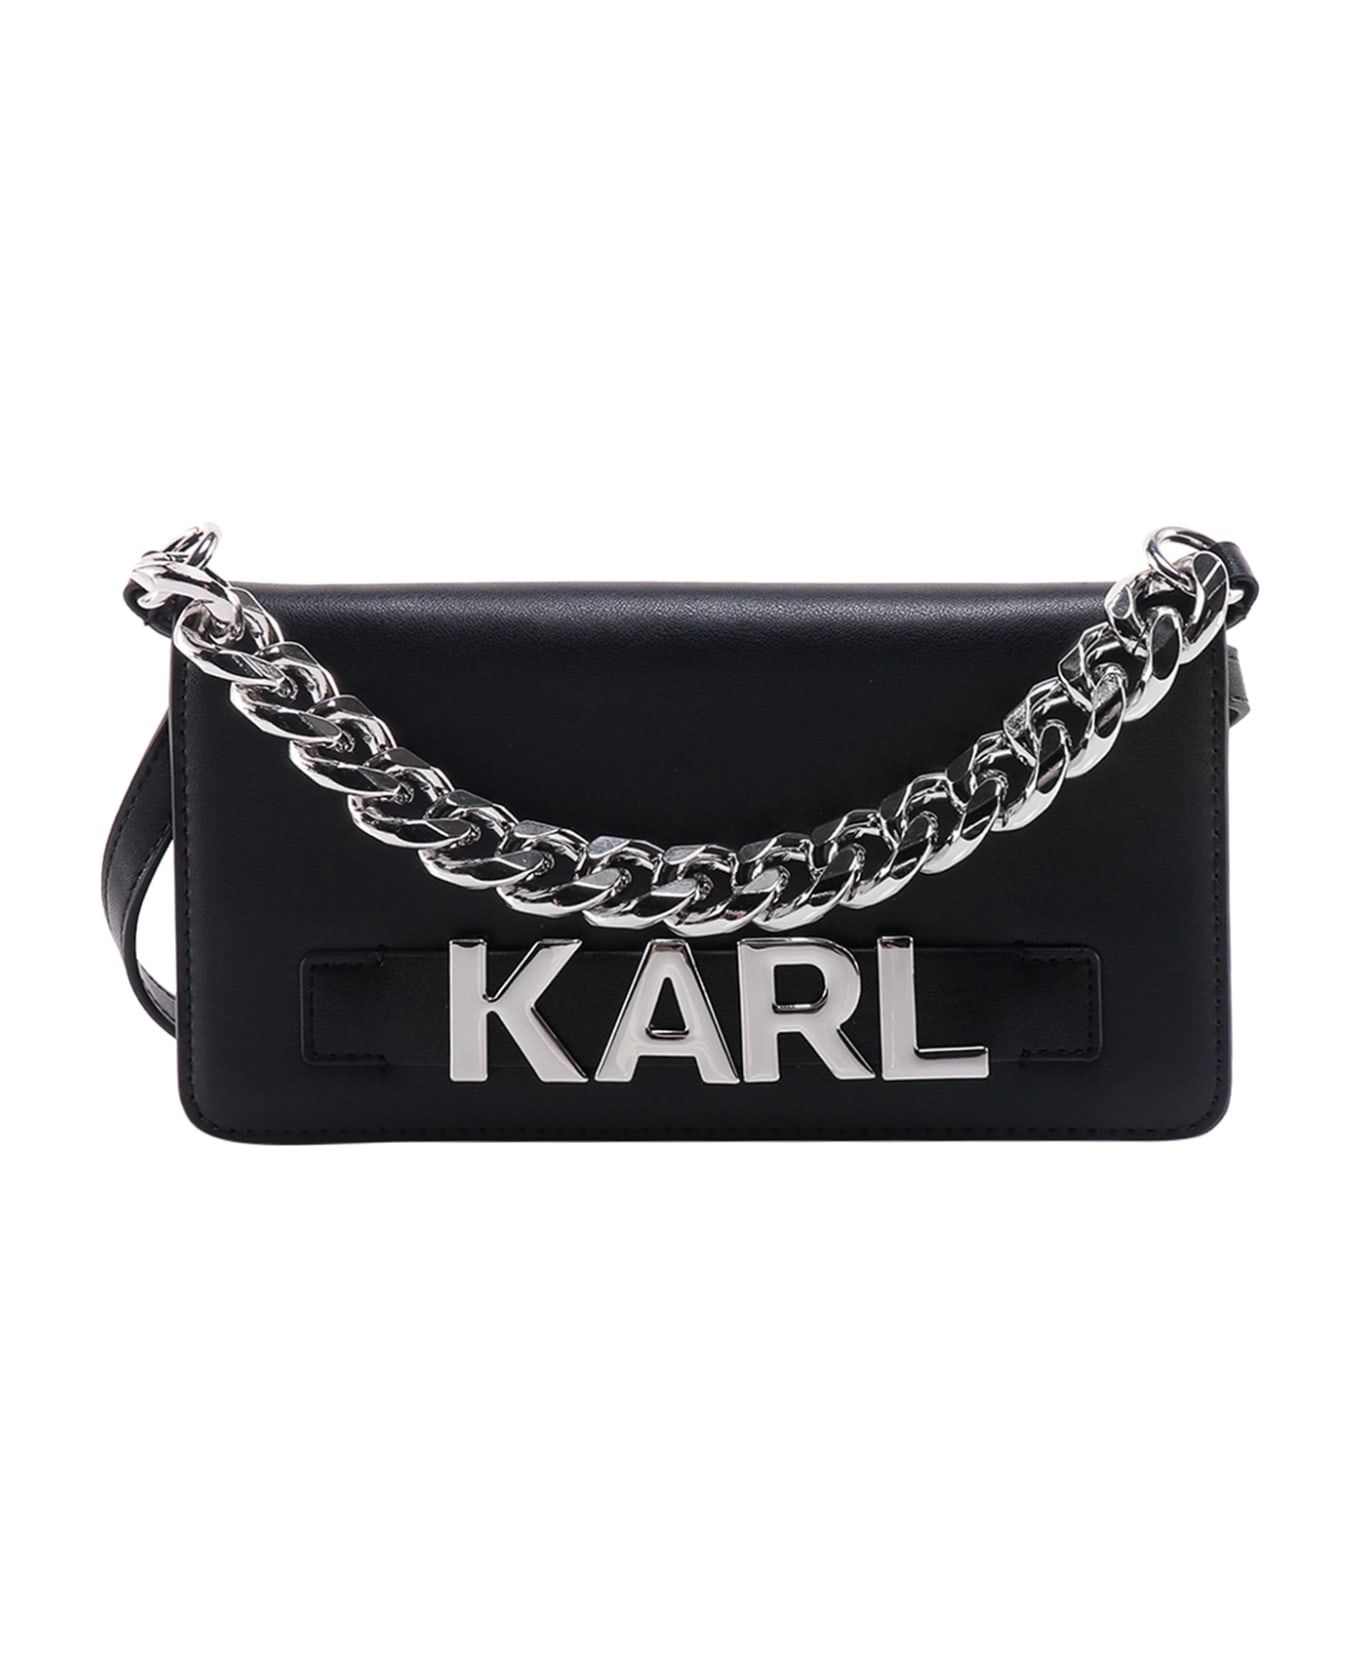 Karl Lagerfeld Phone Case - Black デジタルアクセサリー